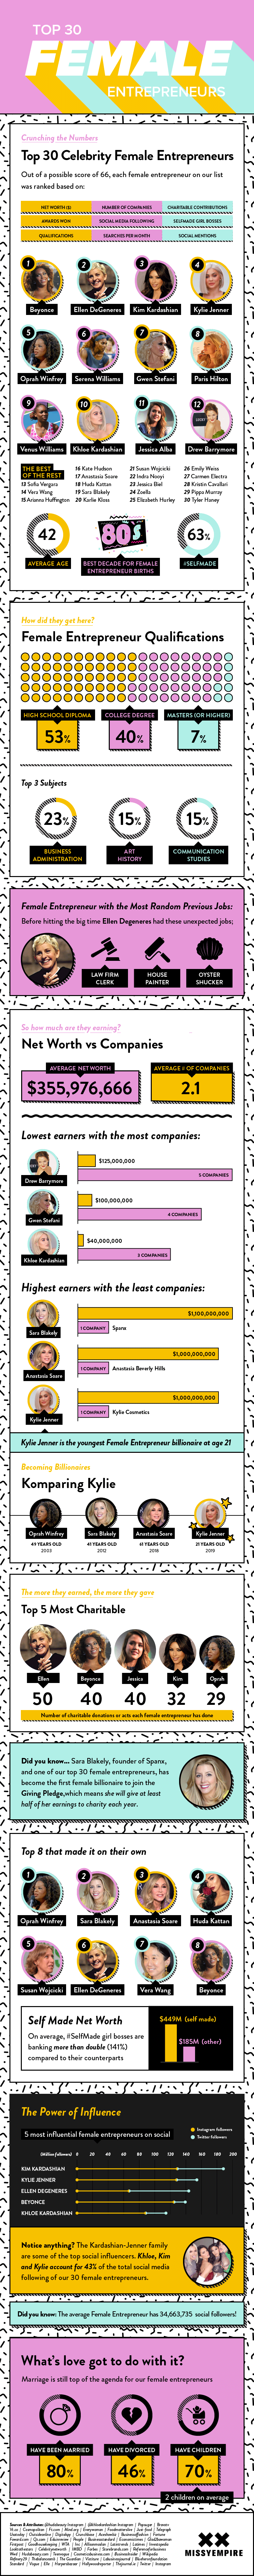 Female-Entrepreneurs-Infographic_v2.png FINAL